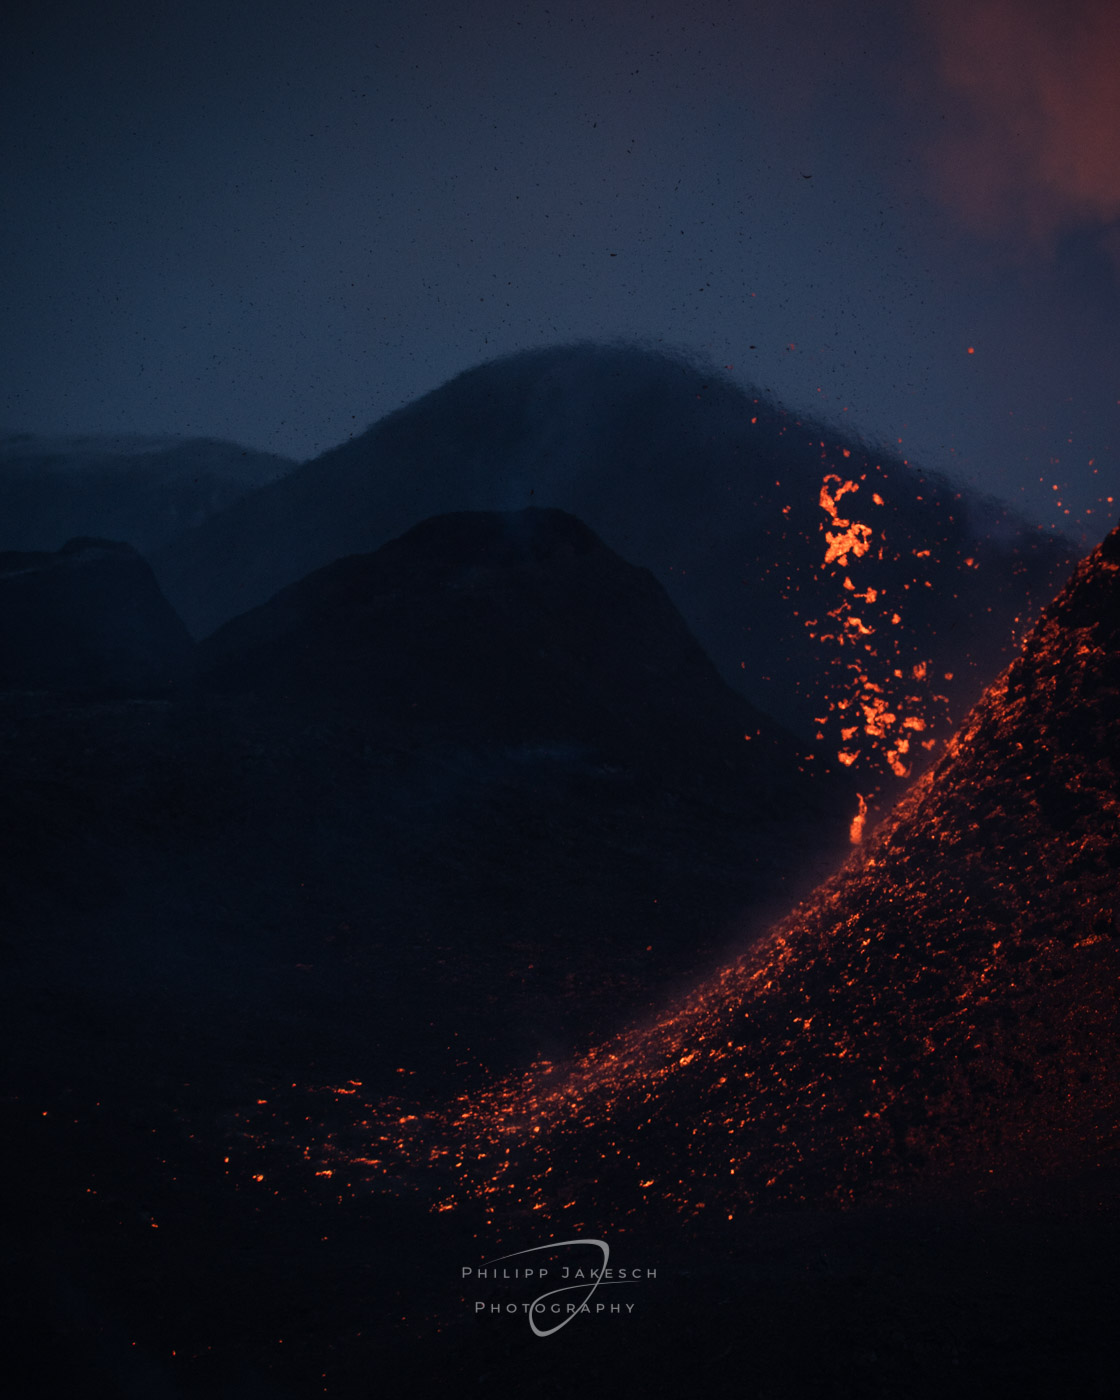 Vulkan auf Island, Philipp Jakesch Photography, Natural Landscape Photography Award, Photograph of the Year